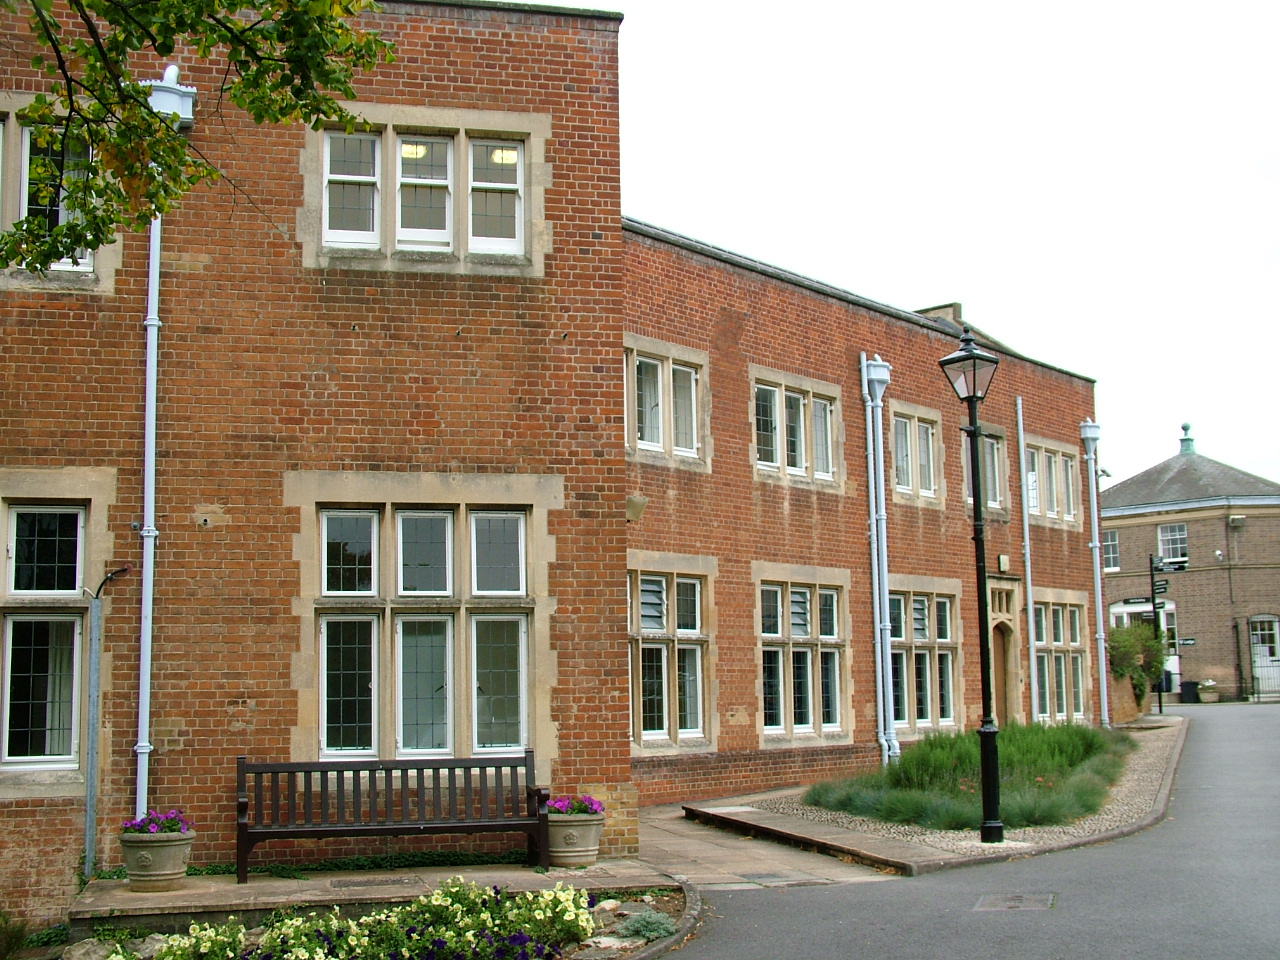 St Hilda's College, Оксфорд